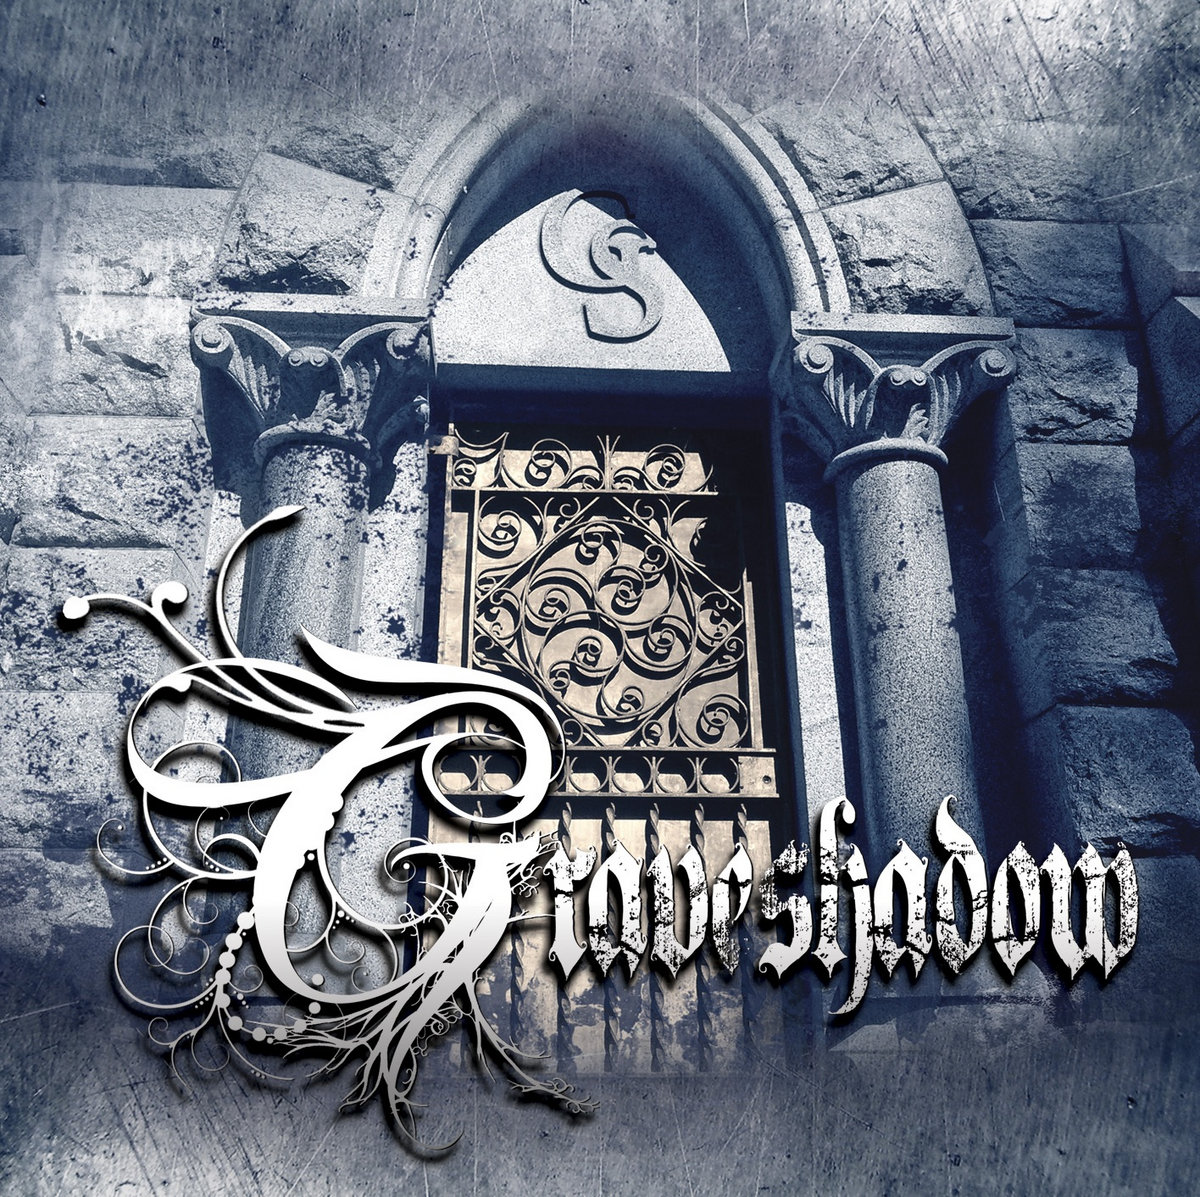 GRAVESHADOW - Graveshadow cover 